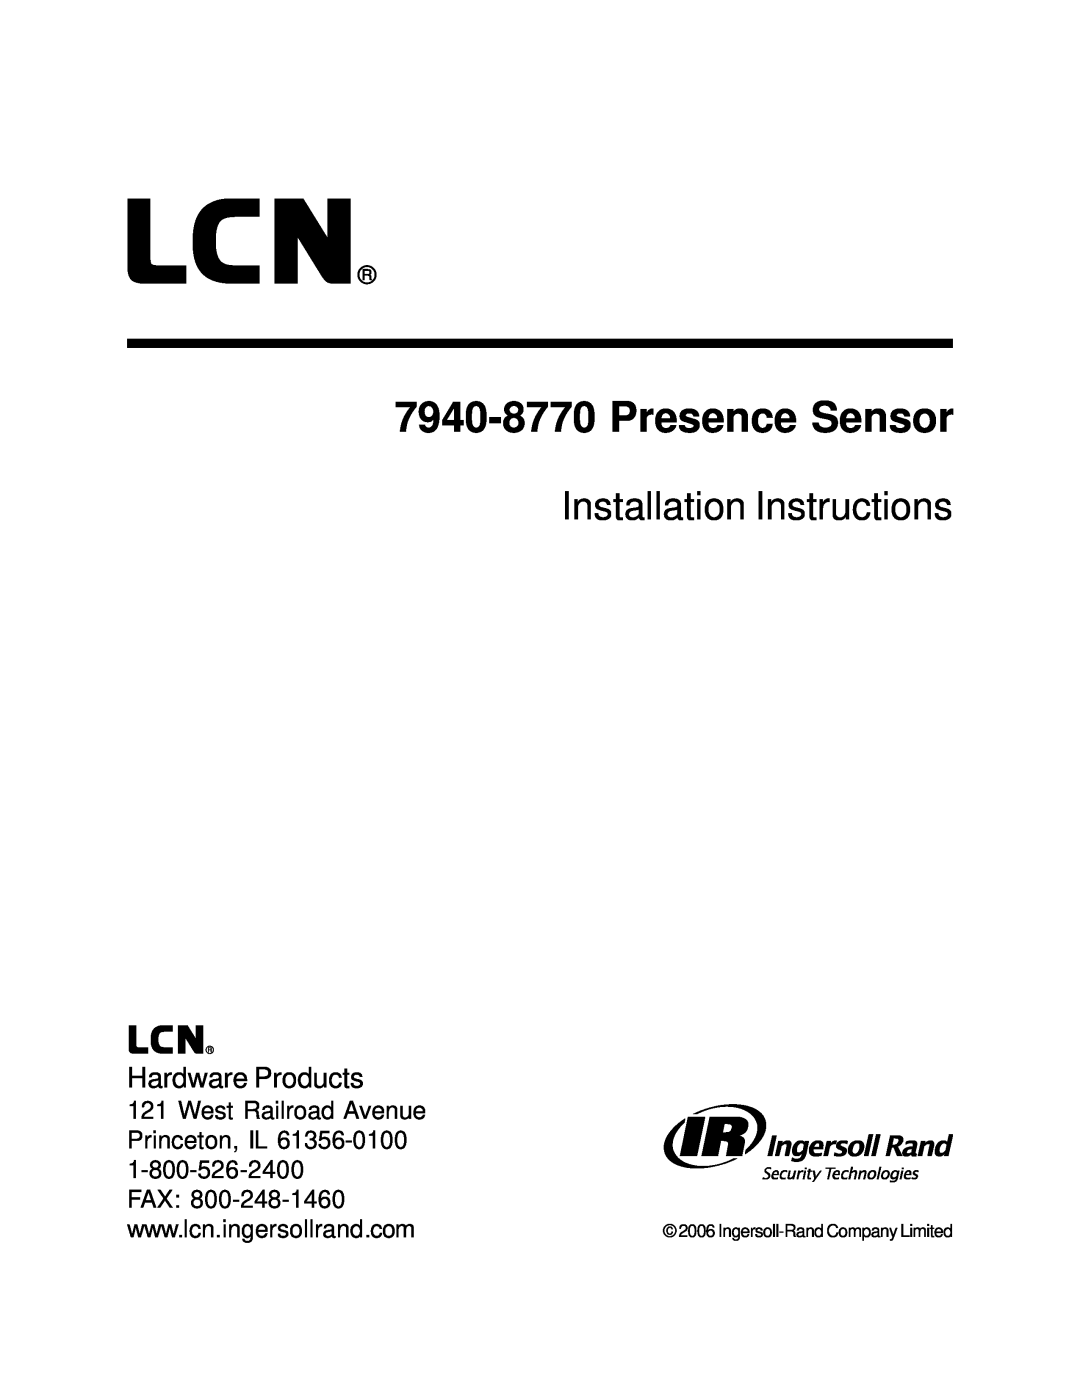 Ingersoll-Rand installation instructions 7940-8770Presence Sensor, Installation Instructions, Hardware Products 